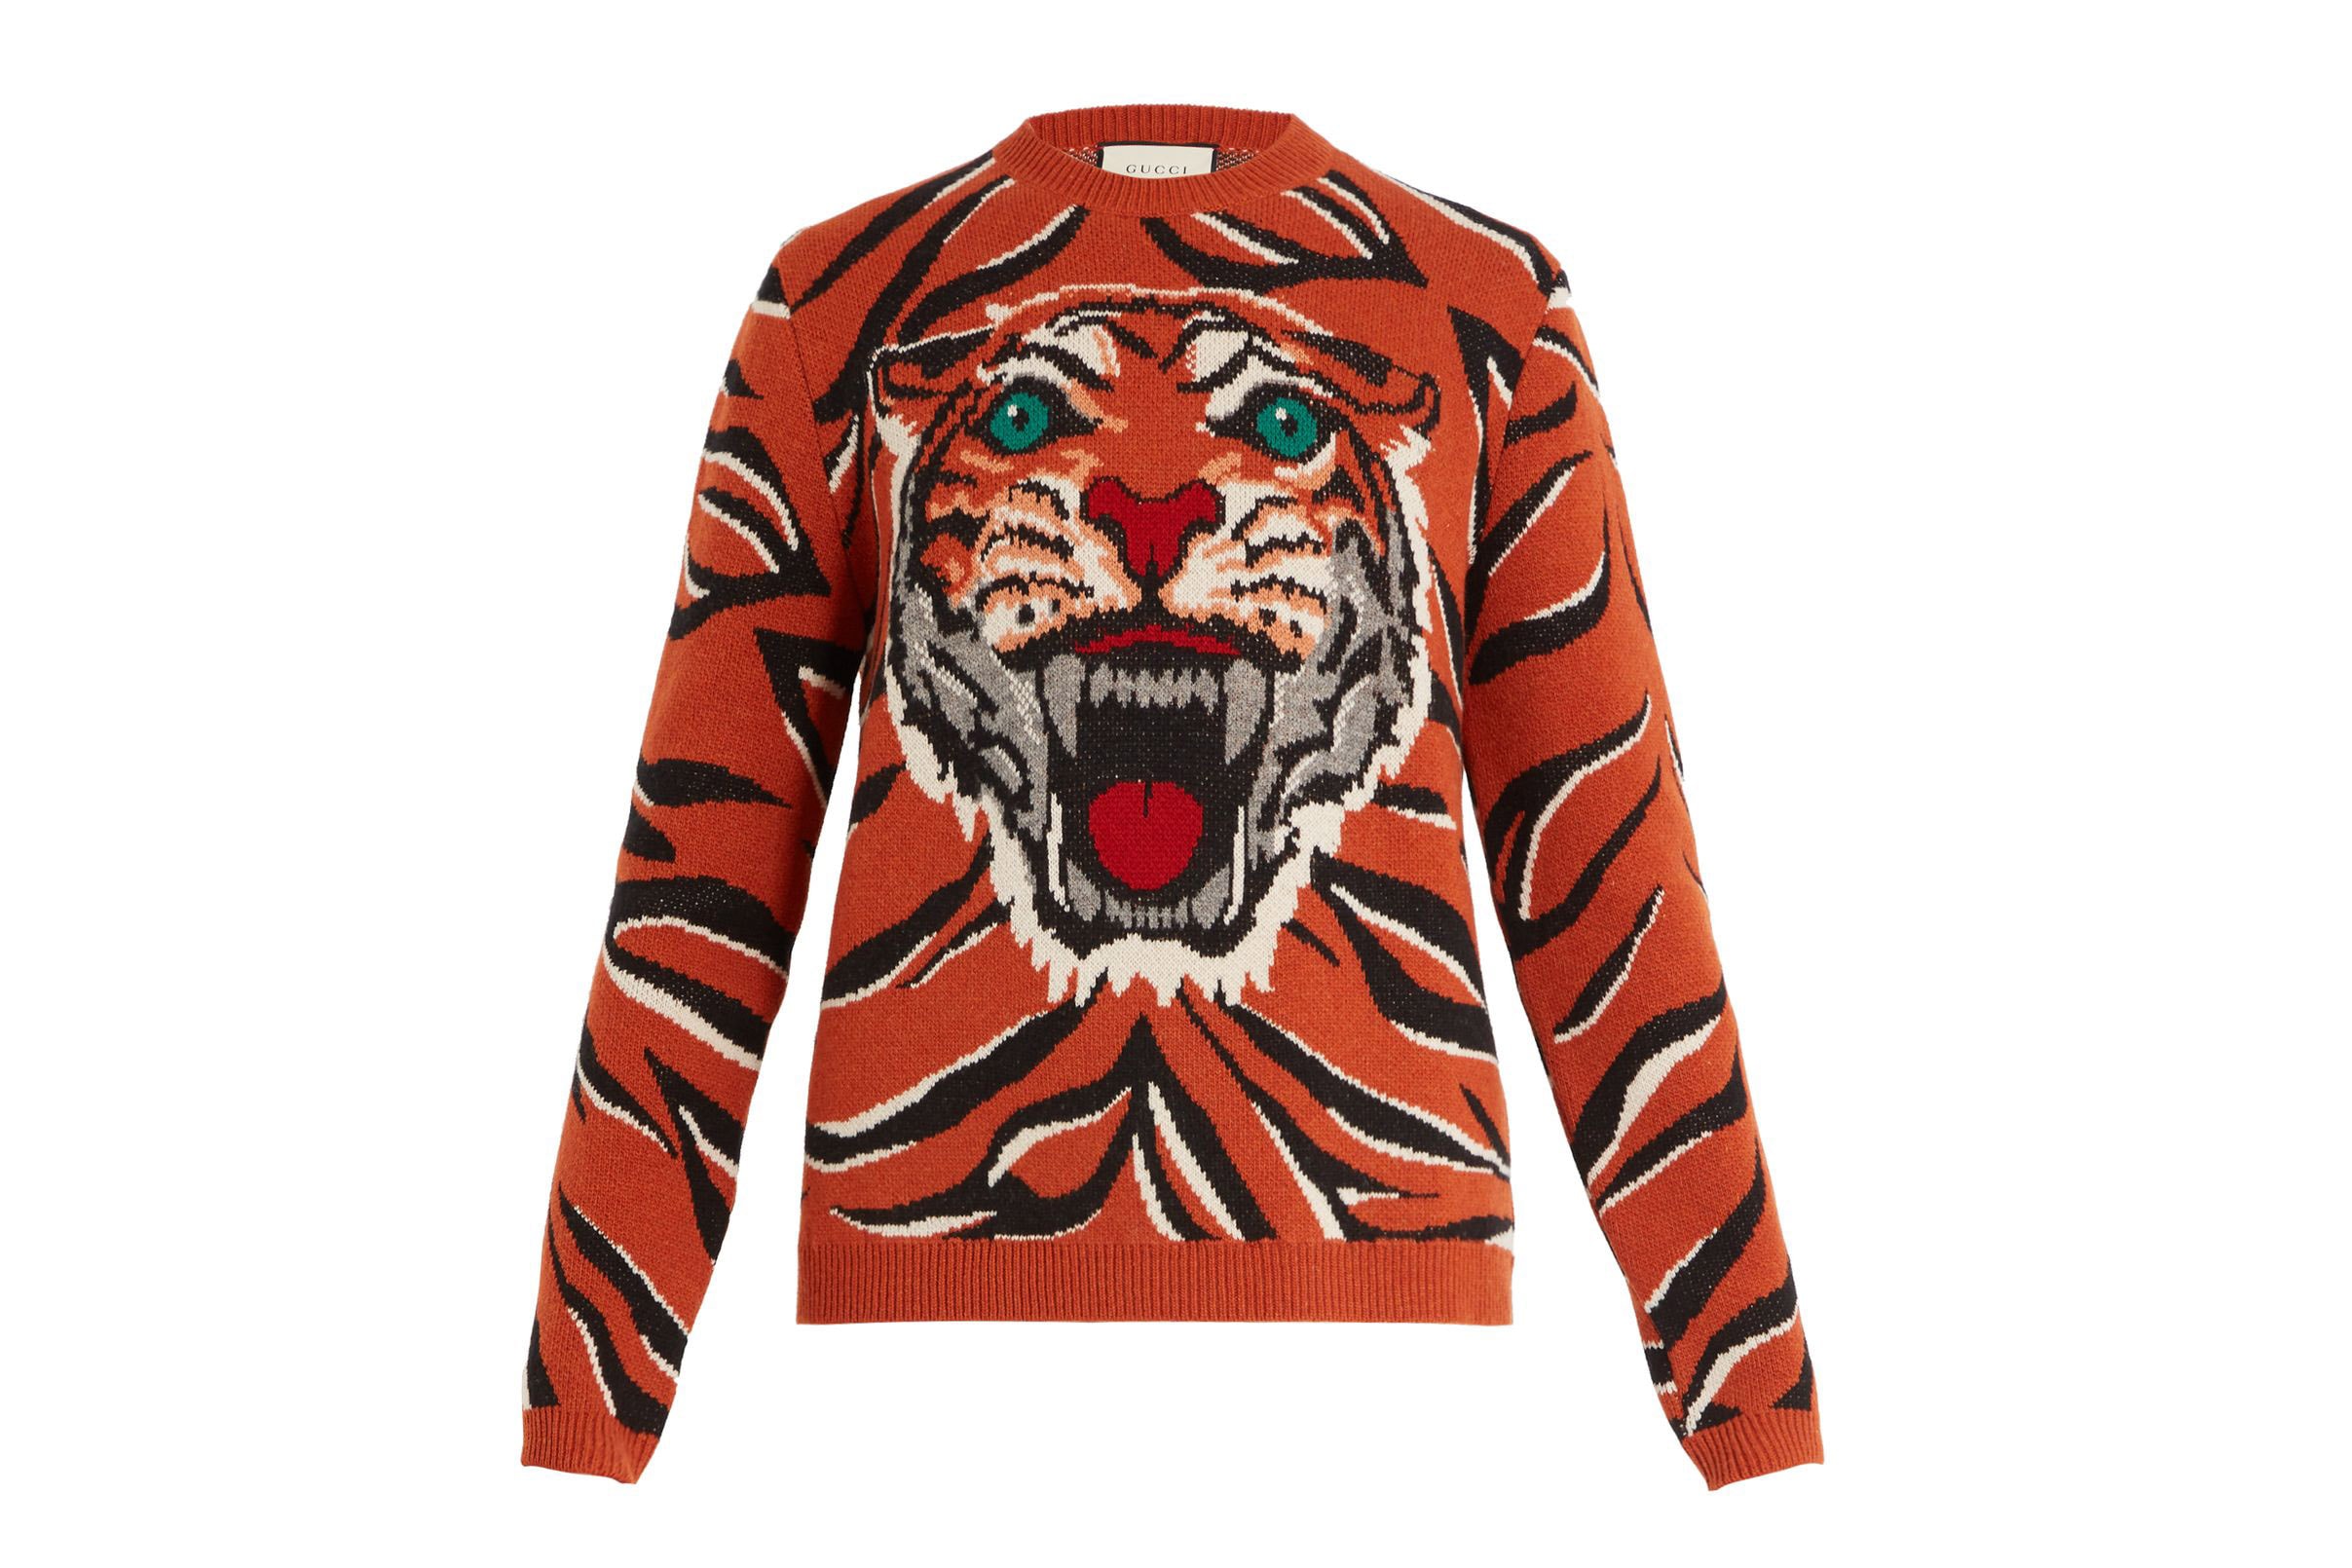 Gucci Bootleg Guccy Printed Sweatshirts Snake Luxury Sweater Teddy Bear Cozy